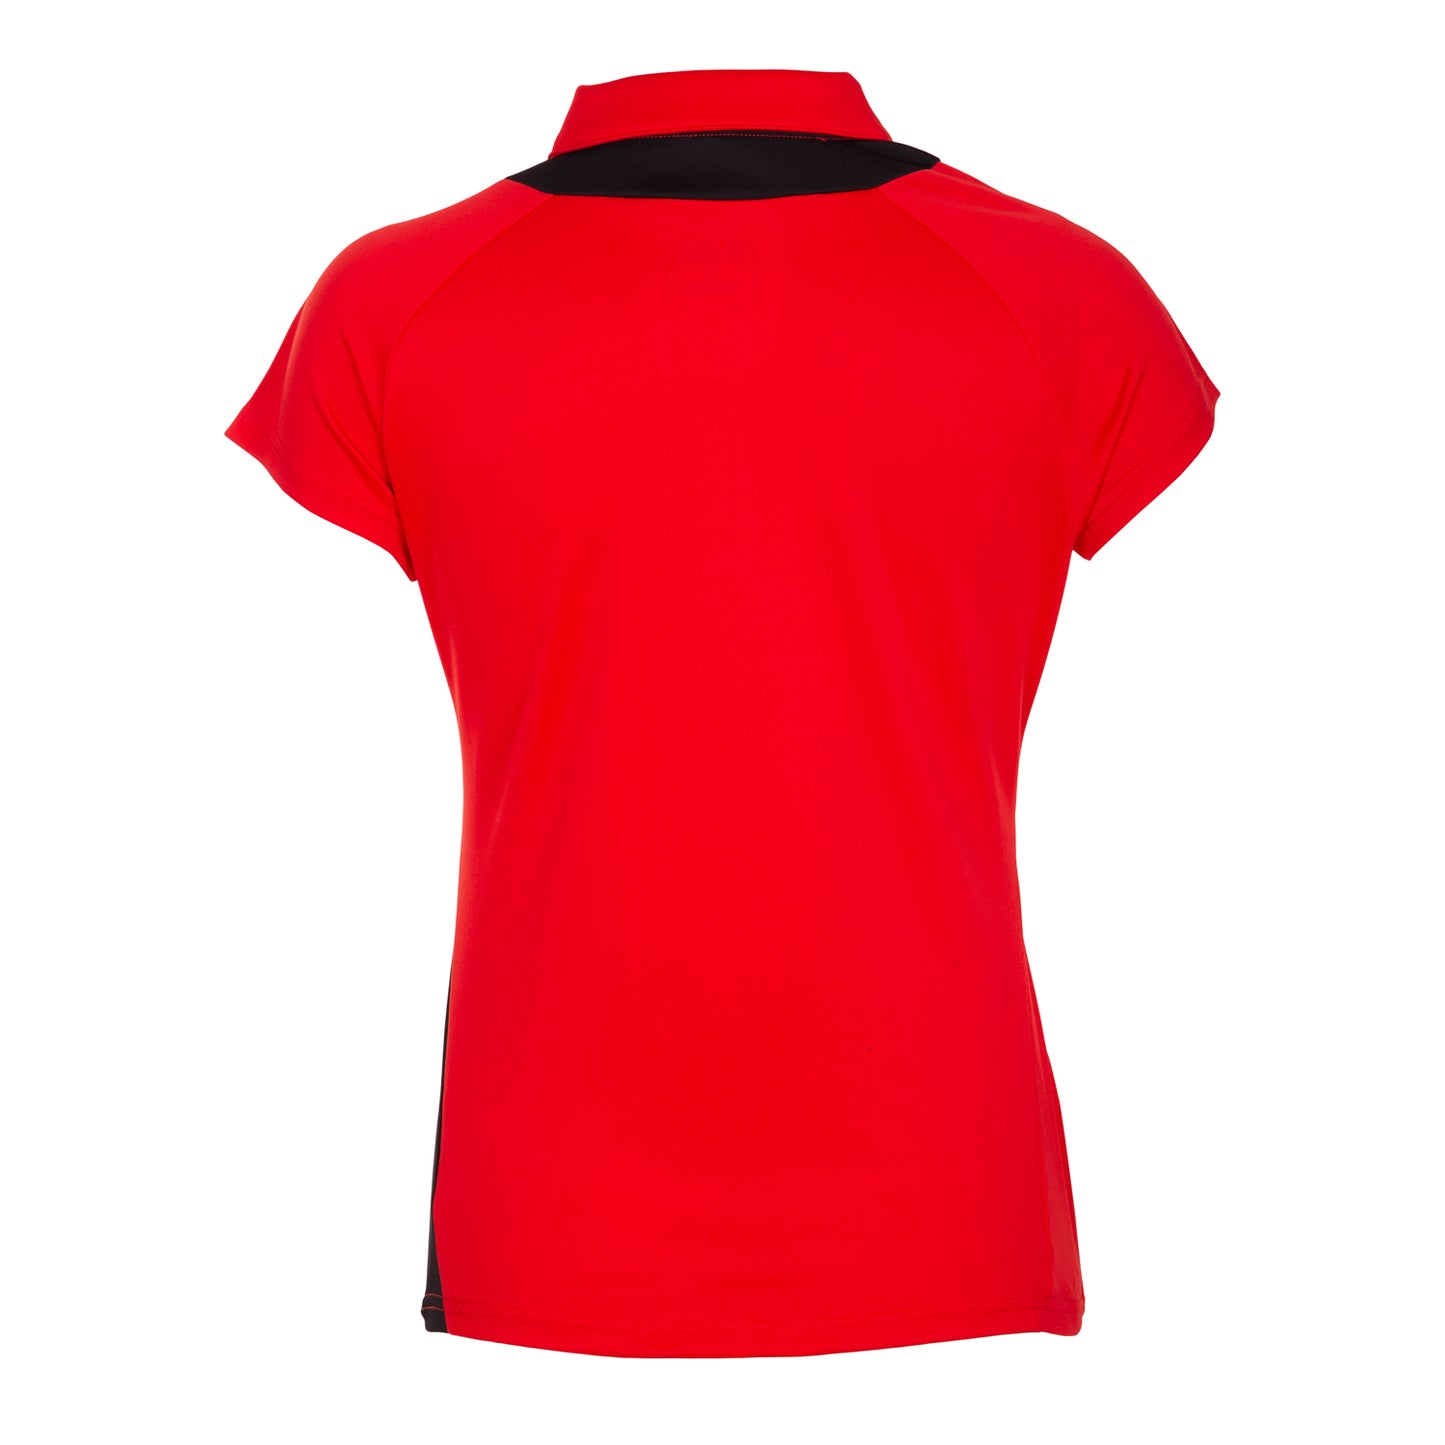 Yonex Badminton Polo T Shirt for Women, High Risk Red - Best Price online Prokicksports.com